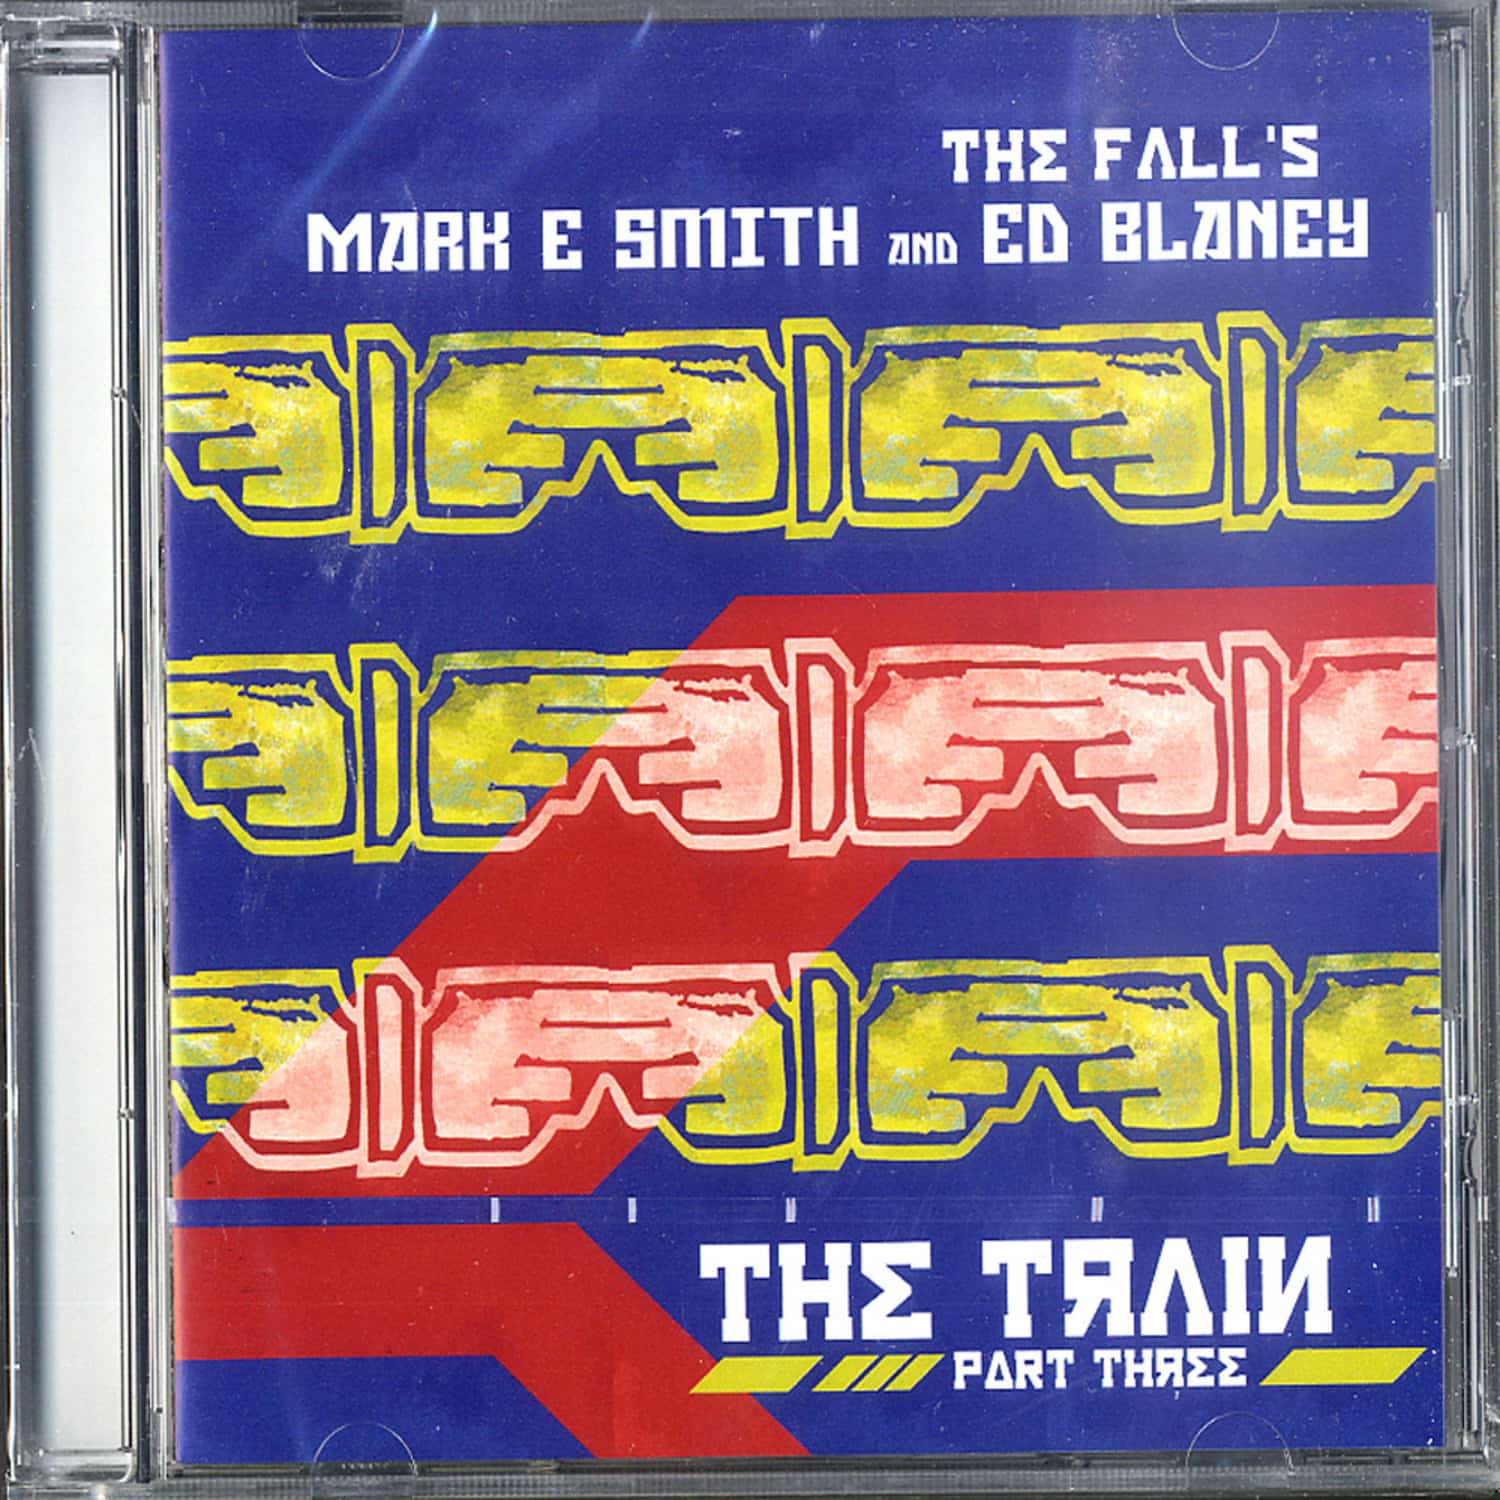 Mark E. Smith & Ed Blaney  - THE TRAIN 